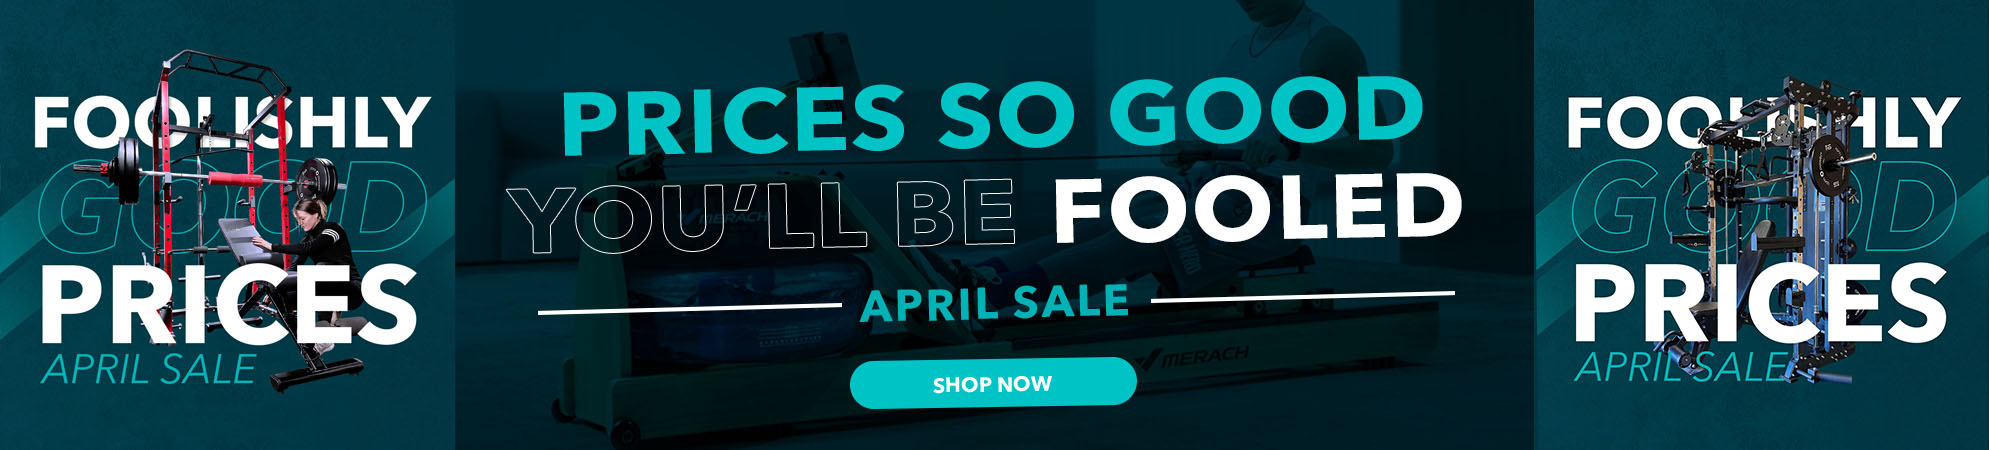 april fitness sale promotional image